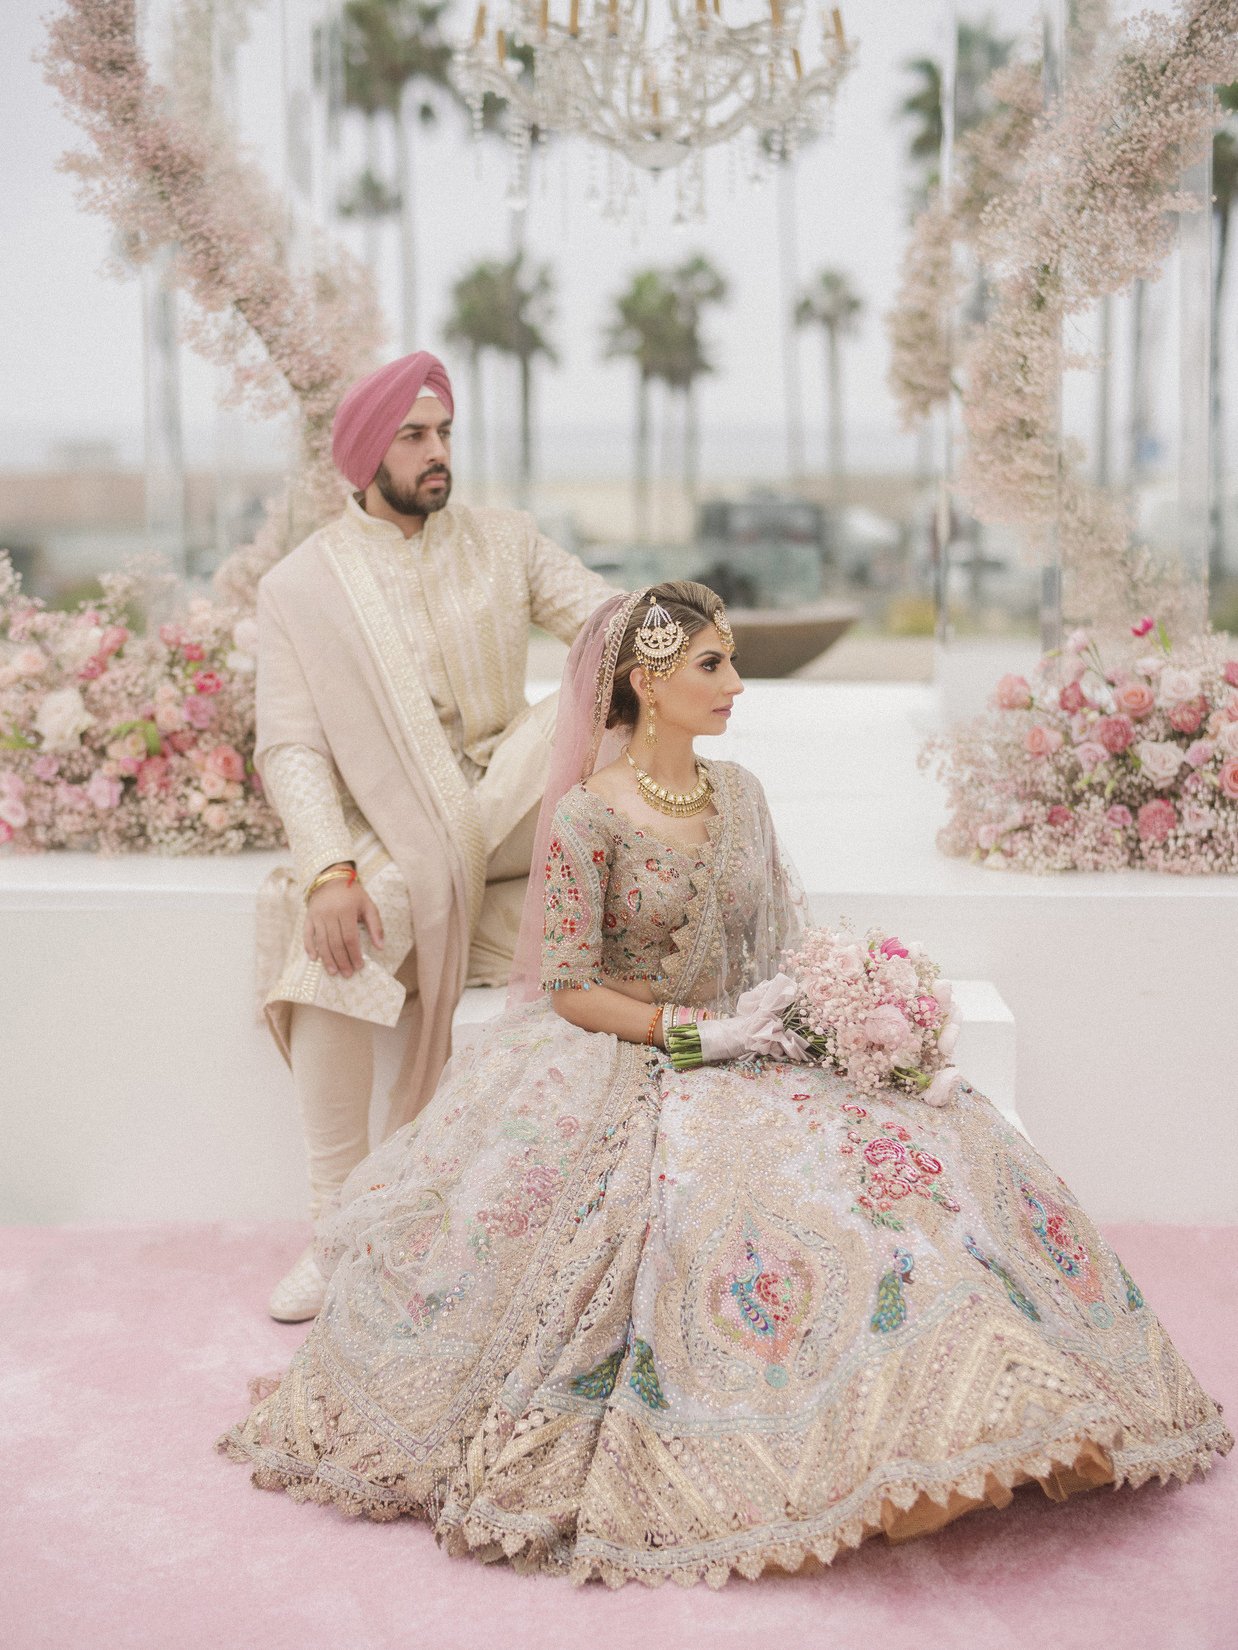 Millennials are transforming $50 billion Indian wedding industry | Vogue  Business